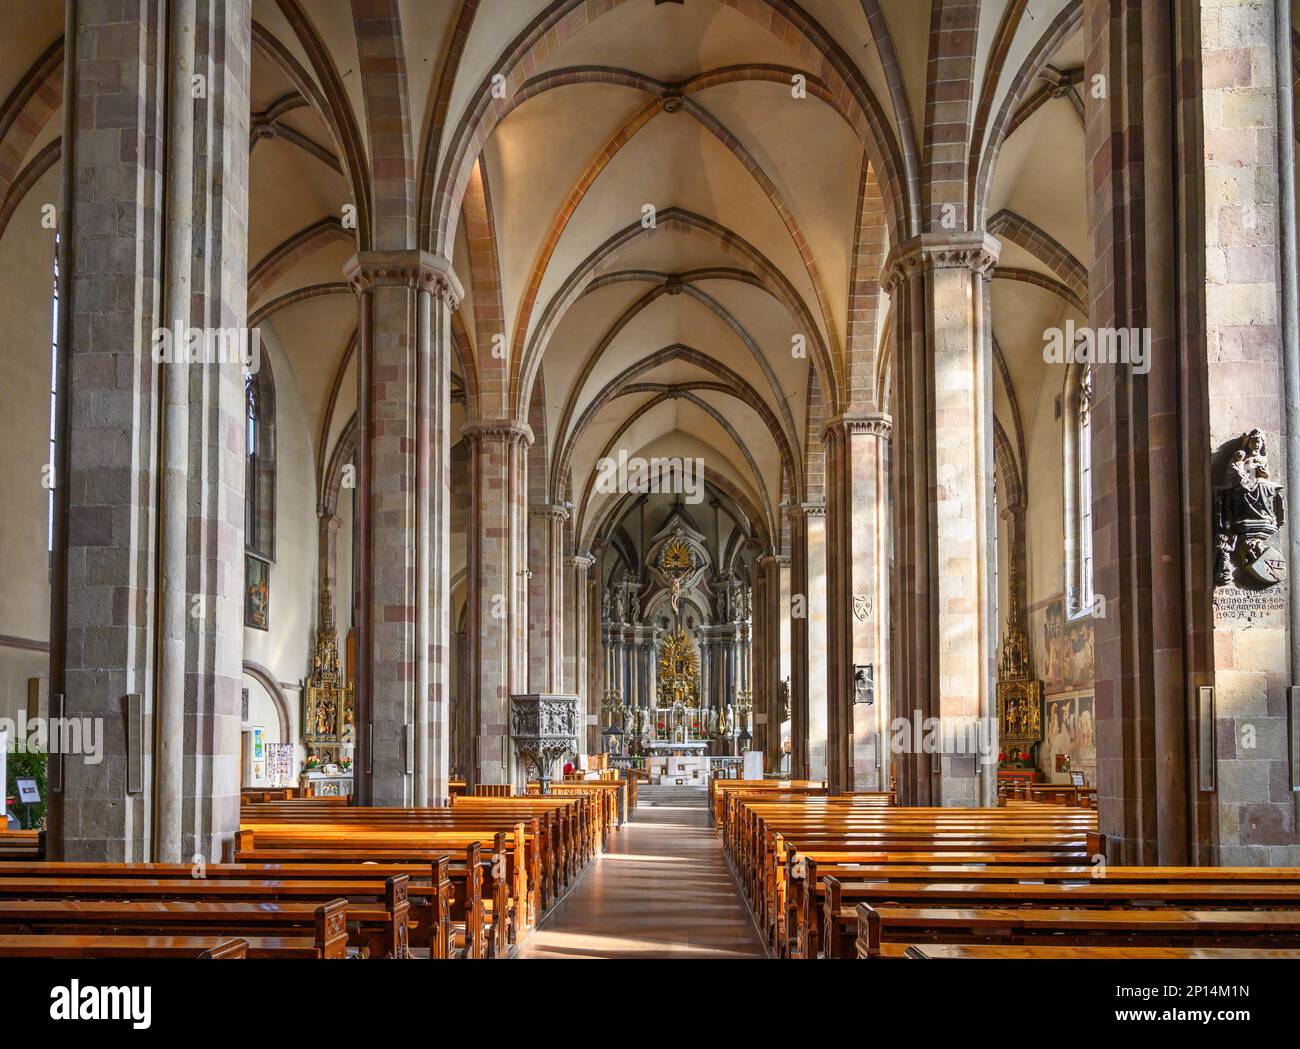 Innere der Kathedrale von Bozen (Duomo di Bozen), Bozen Bozen, Italien Stockfoto